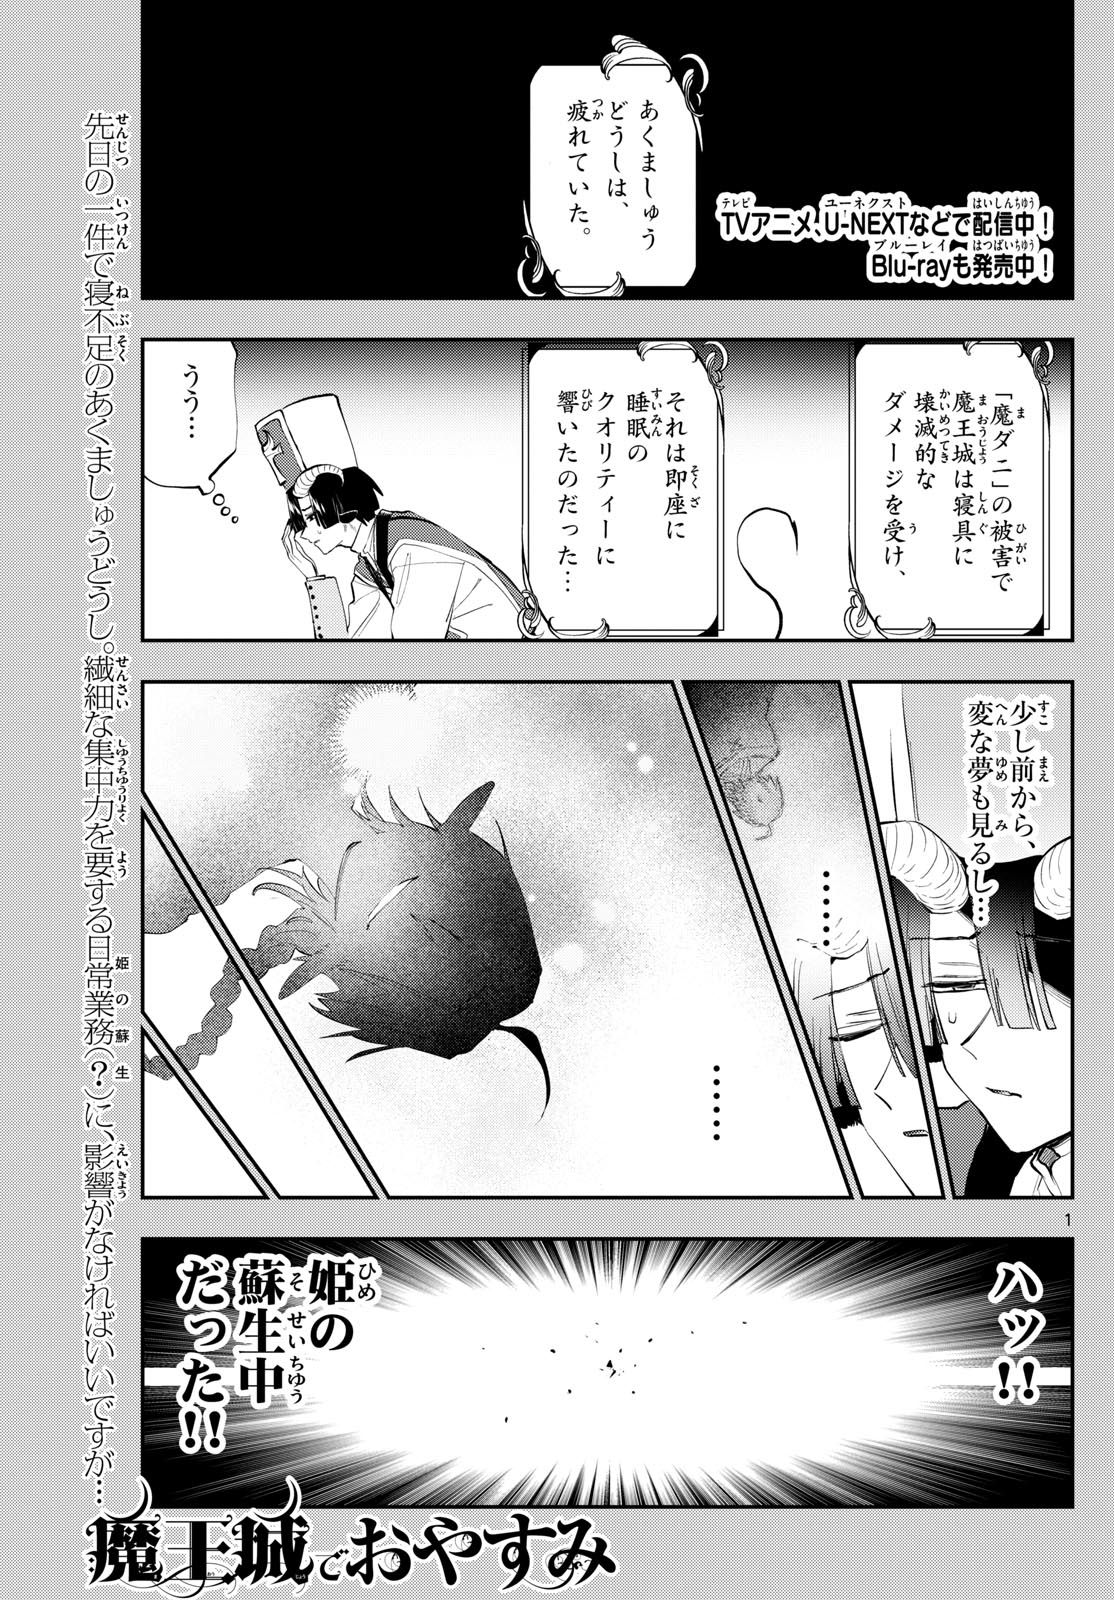 Maou-jou de Oyasumi - Chapter 350 - Page 1